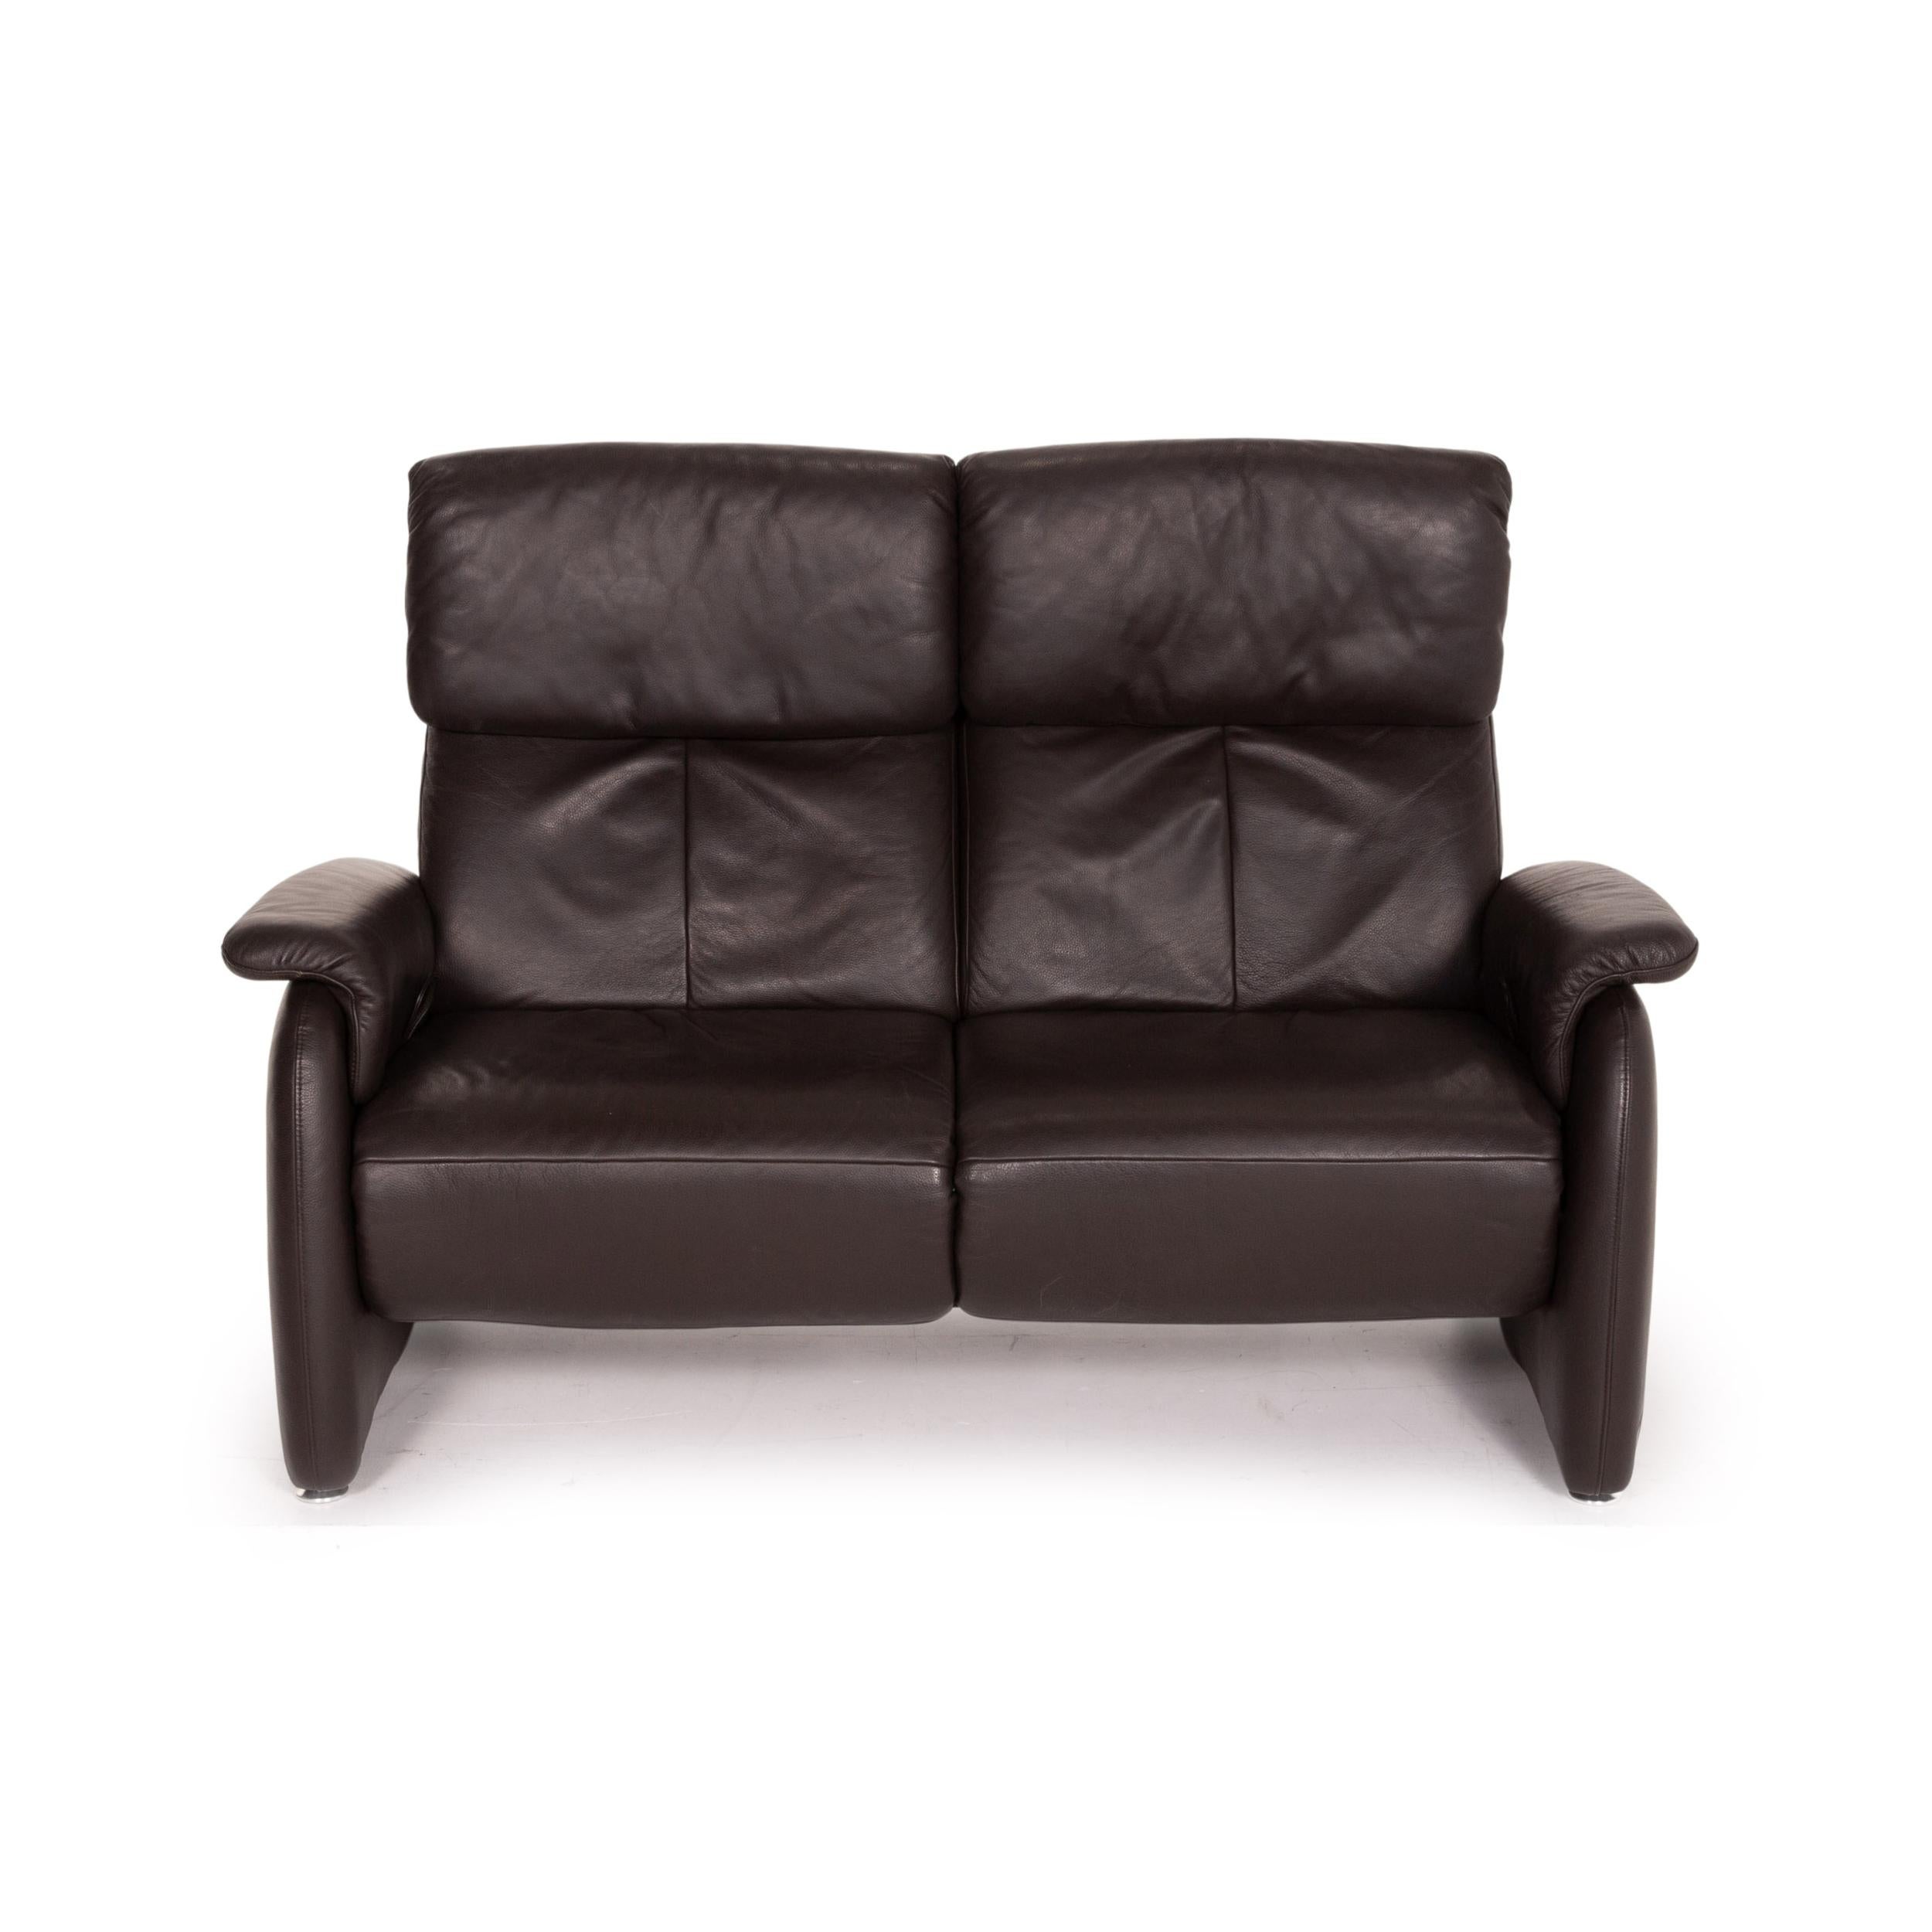 Willi Schillig Leather Sofa Set Brown Dark Brown 1x Three-Seater 1x Two-Seater 10